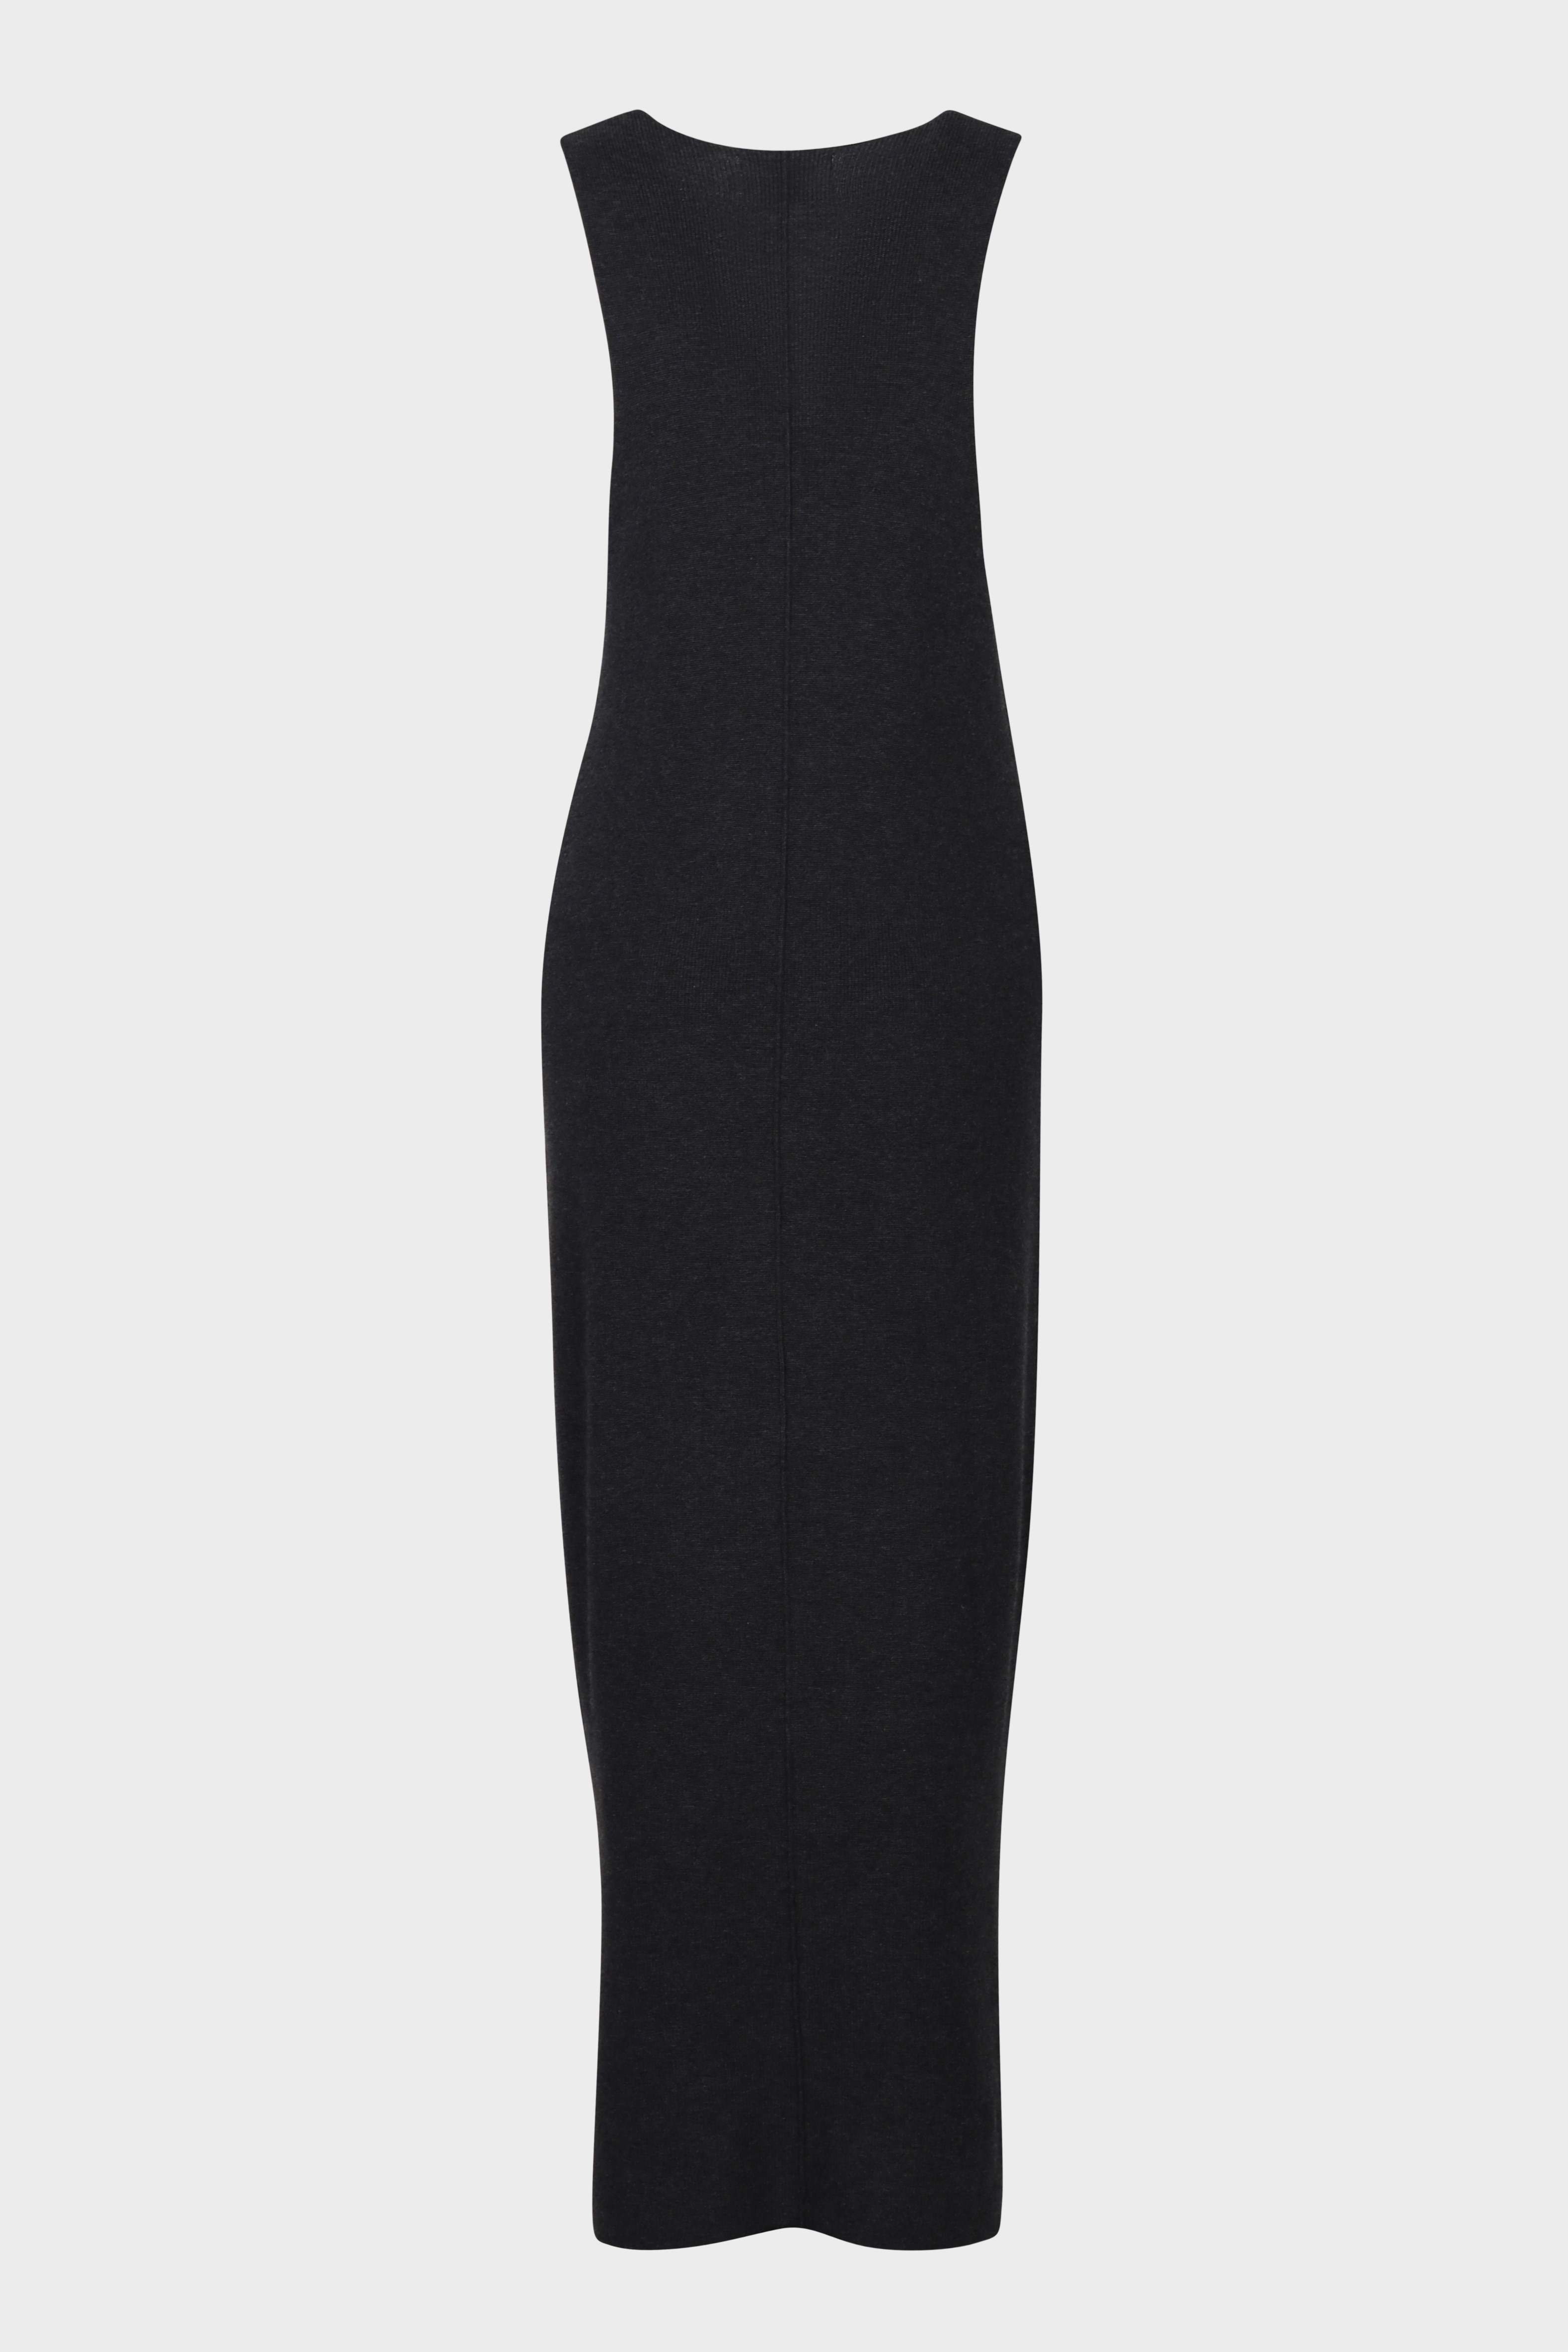 FLONA Cotton/ Cashmere Knit Dress in Dark Grey XS